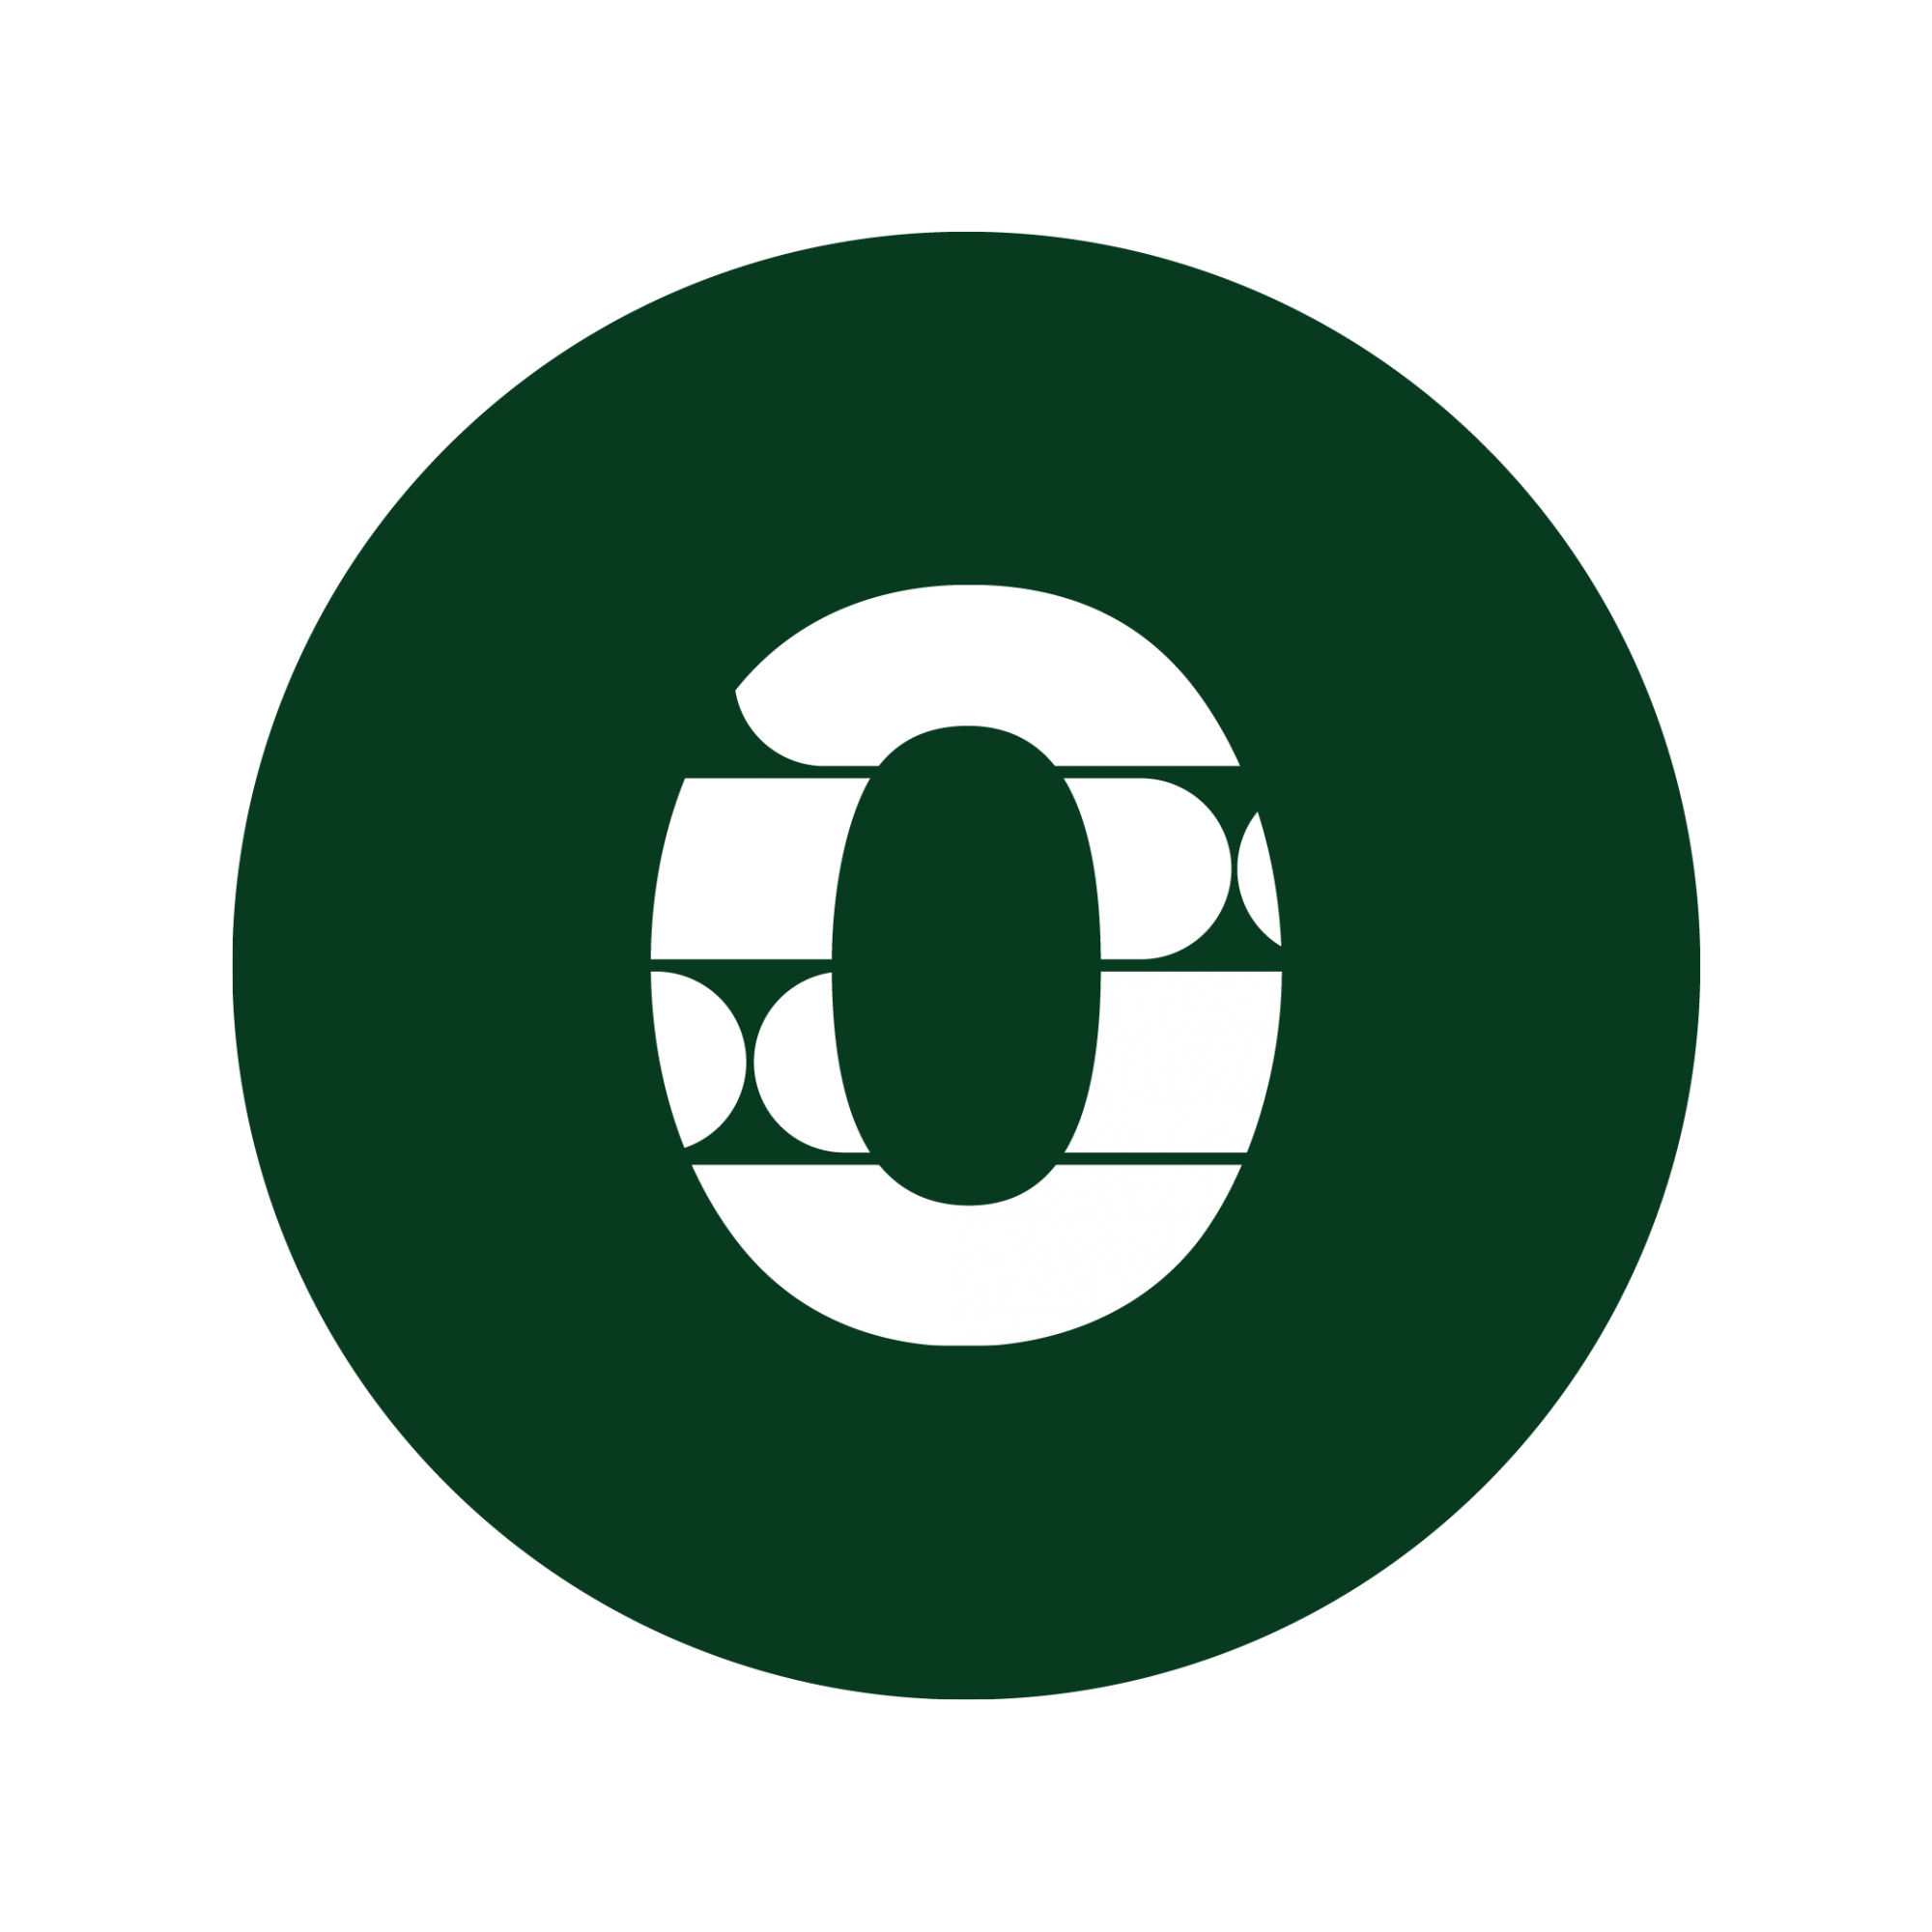 logo Officemanager.nl